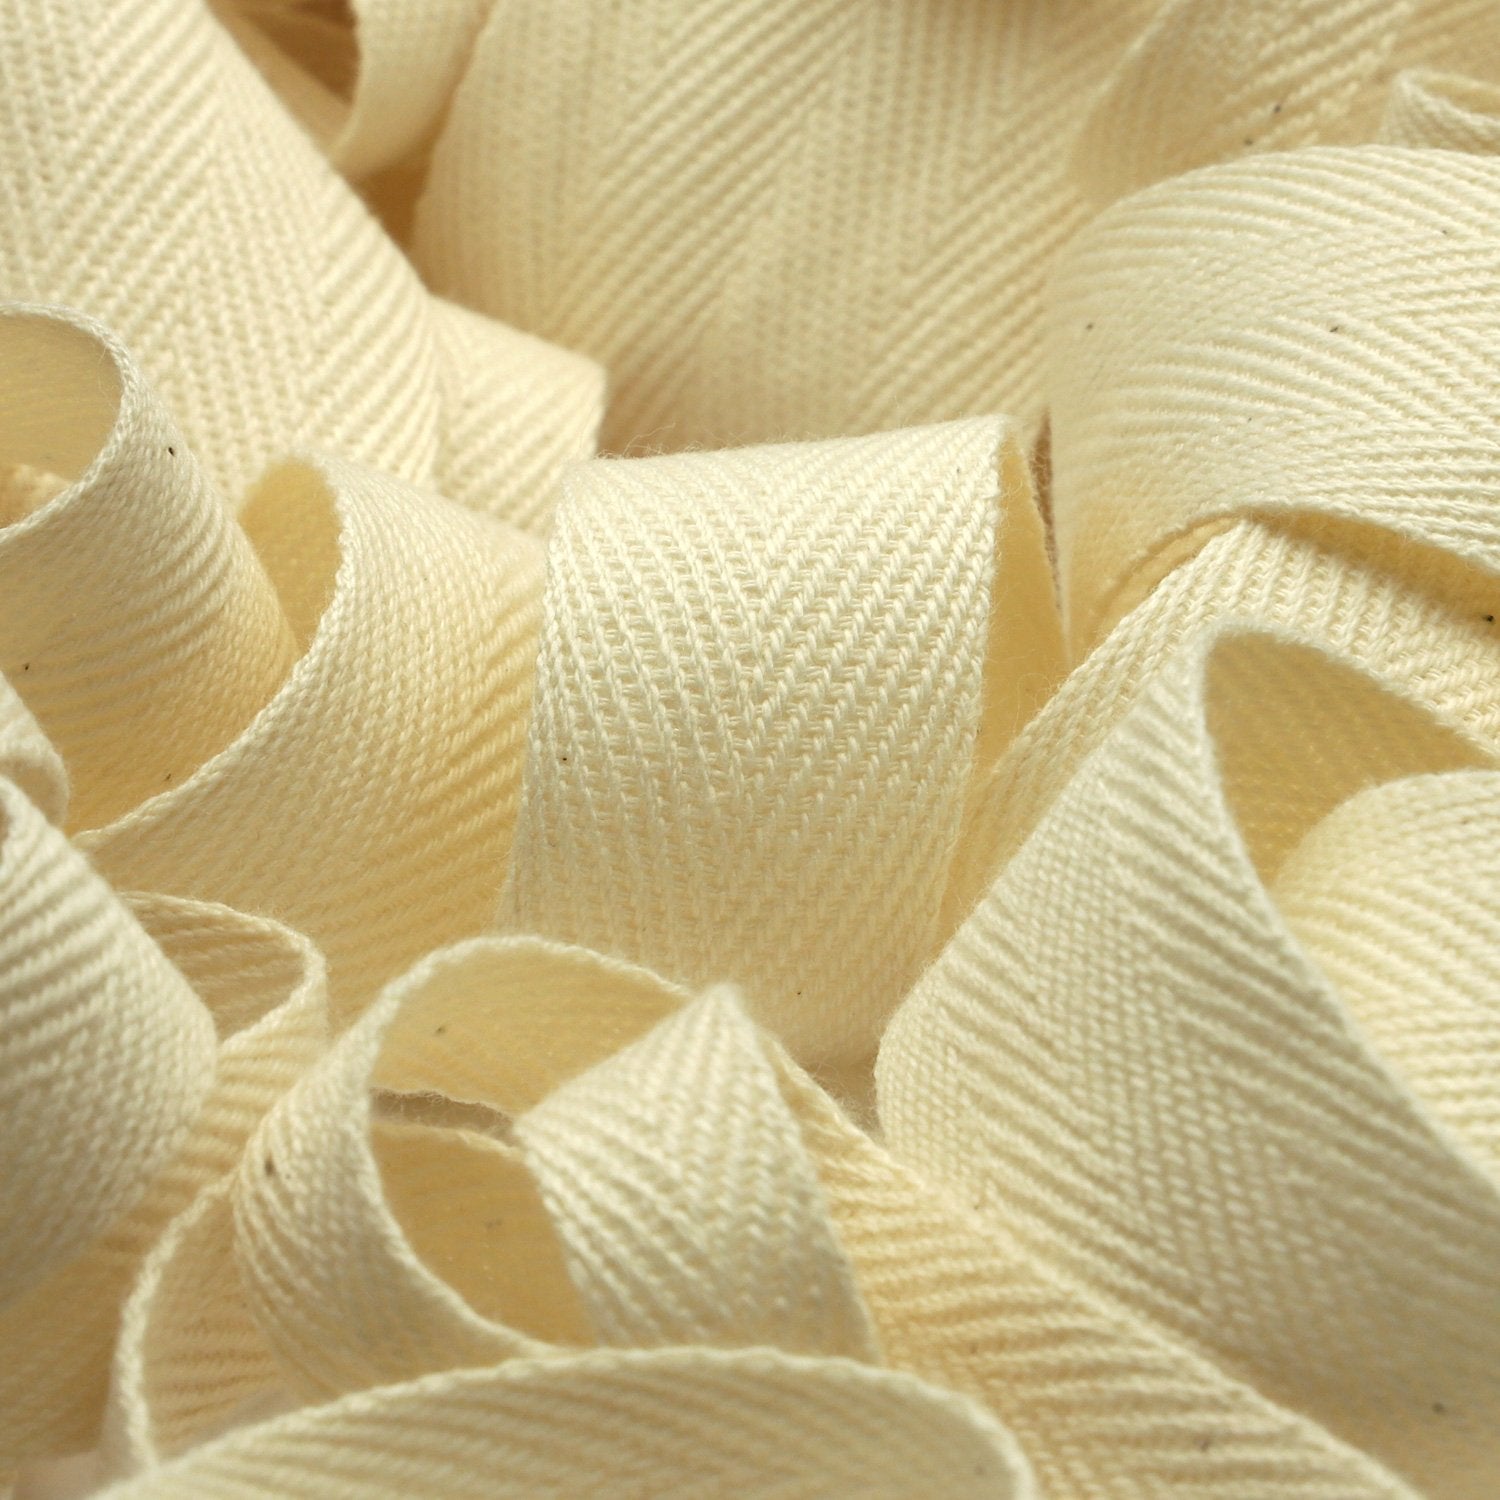 FUJIYAMA RIBBON [Wholesale] Organic Cotton Herringbone Ribbon 15mm Ecru 30 Meters Roll